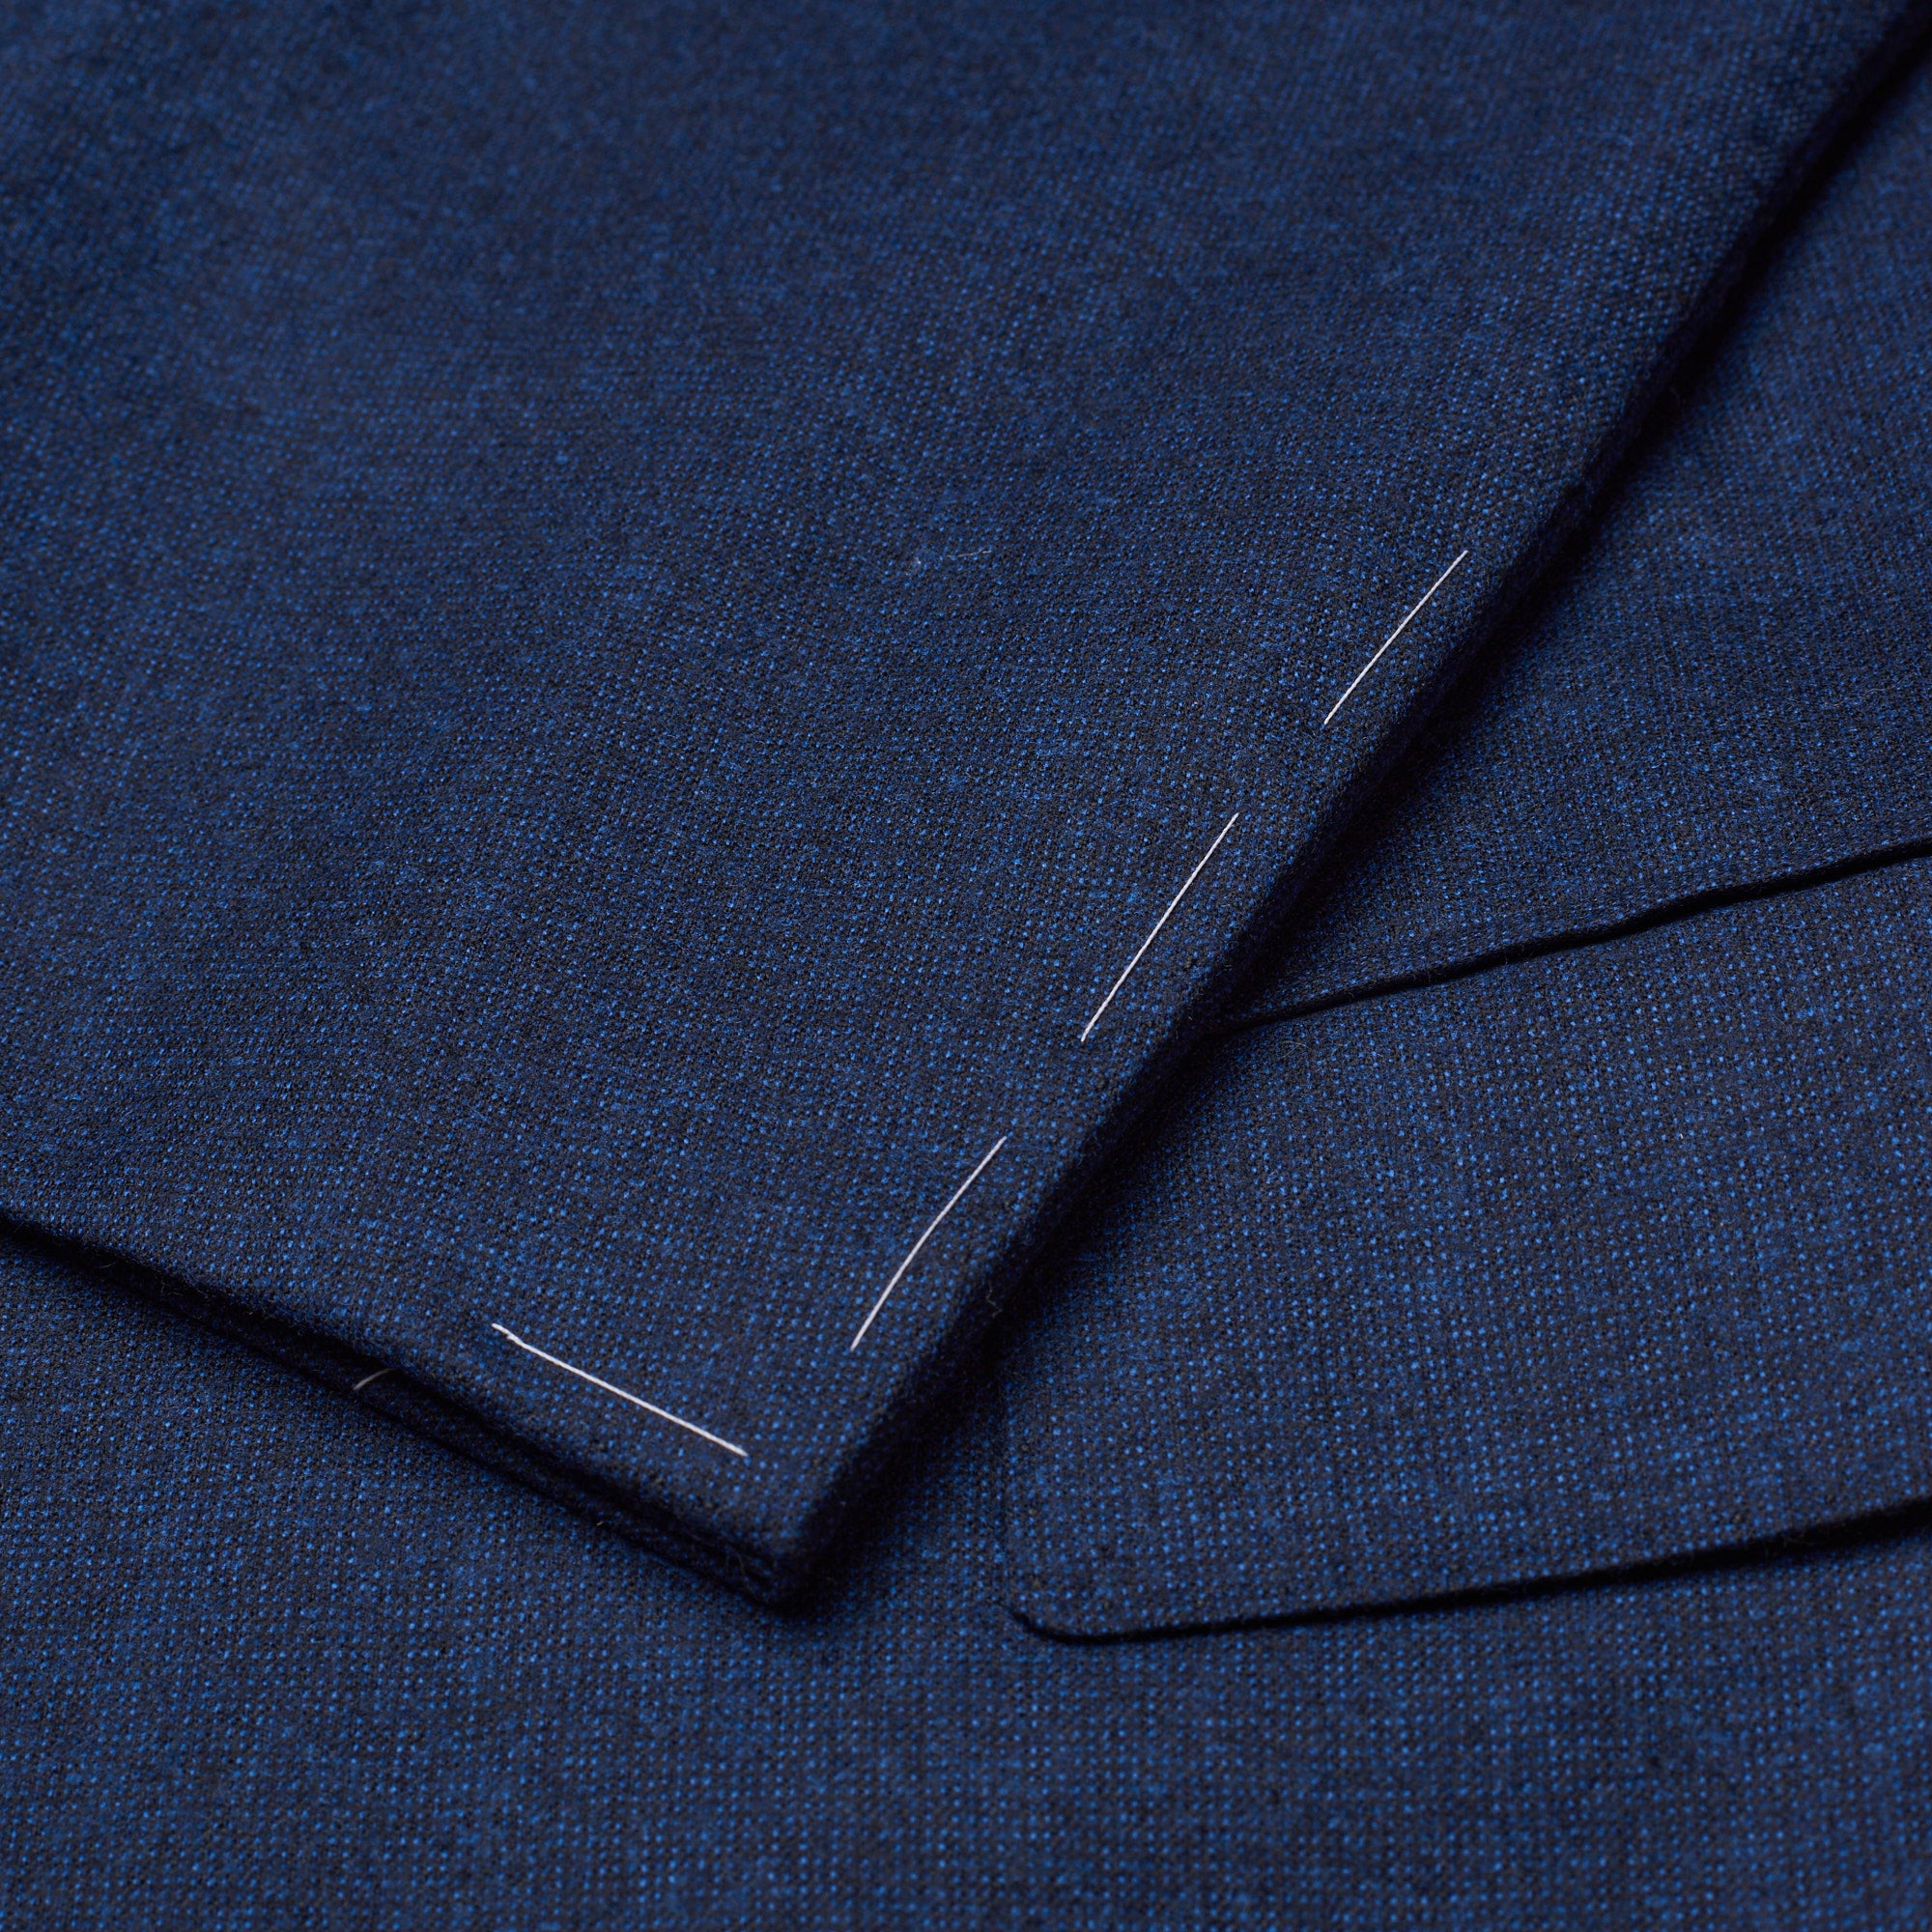 CESARE ATTOLINI Handmade Navy Blue Nailhead Wool Super 120's Suit EU 50 NEW US 40 CESARE ATTOLINI